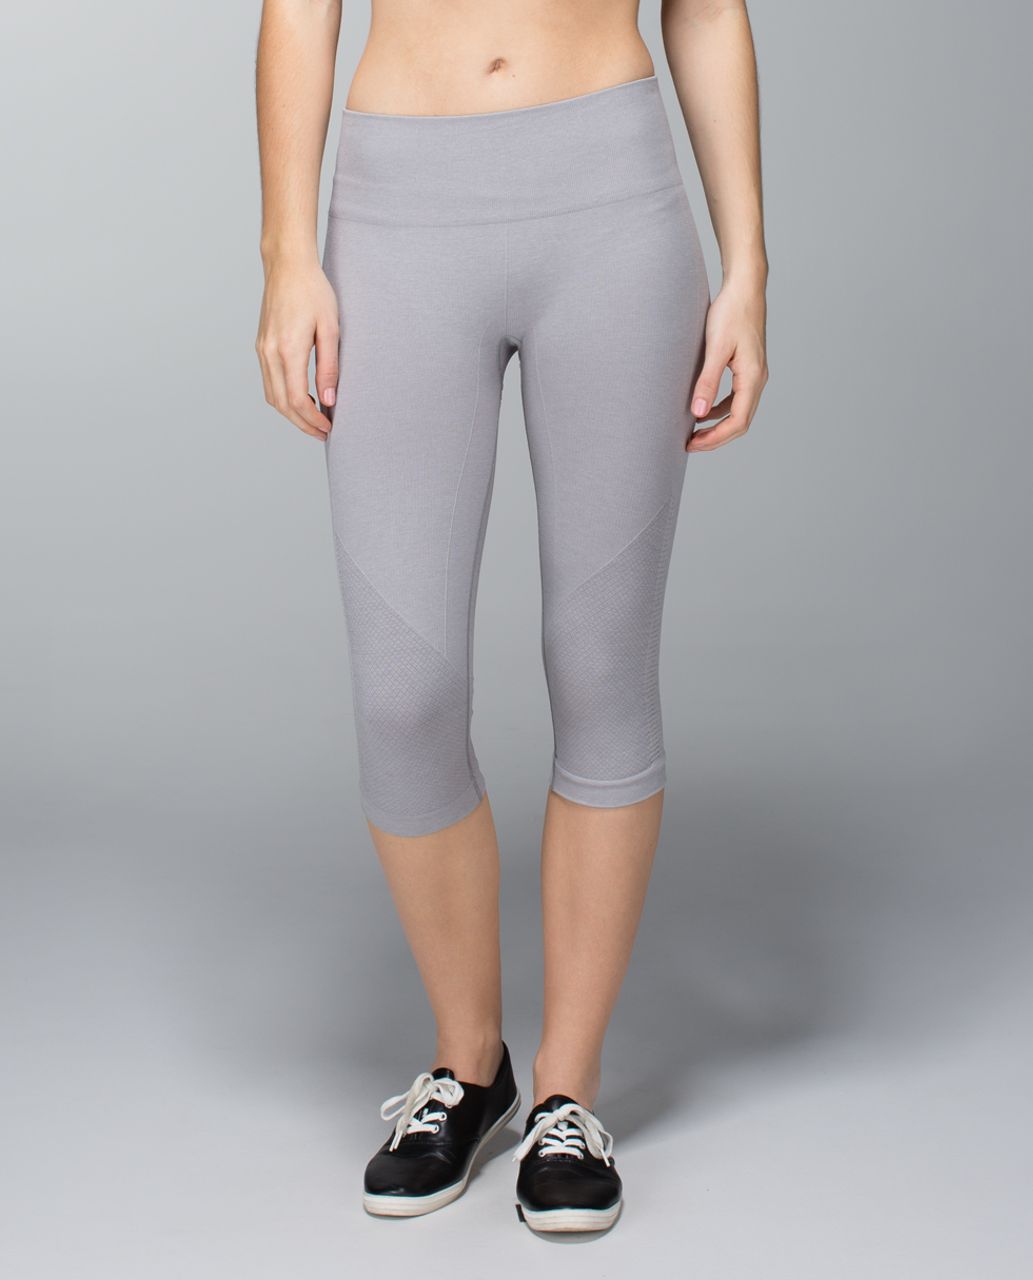 Buy JOYSHAPER High Waist Cropped Leggings with Pocket for Women Running  Workout Tights Slimming Gym Capri Pants, Grey-491, Medium at Amazon.in